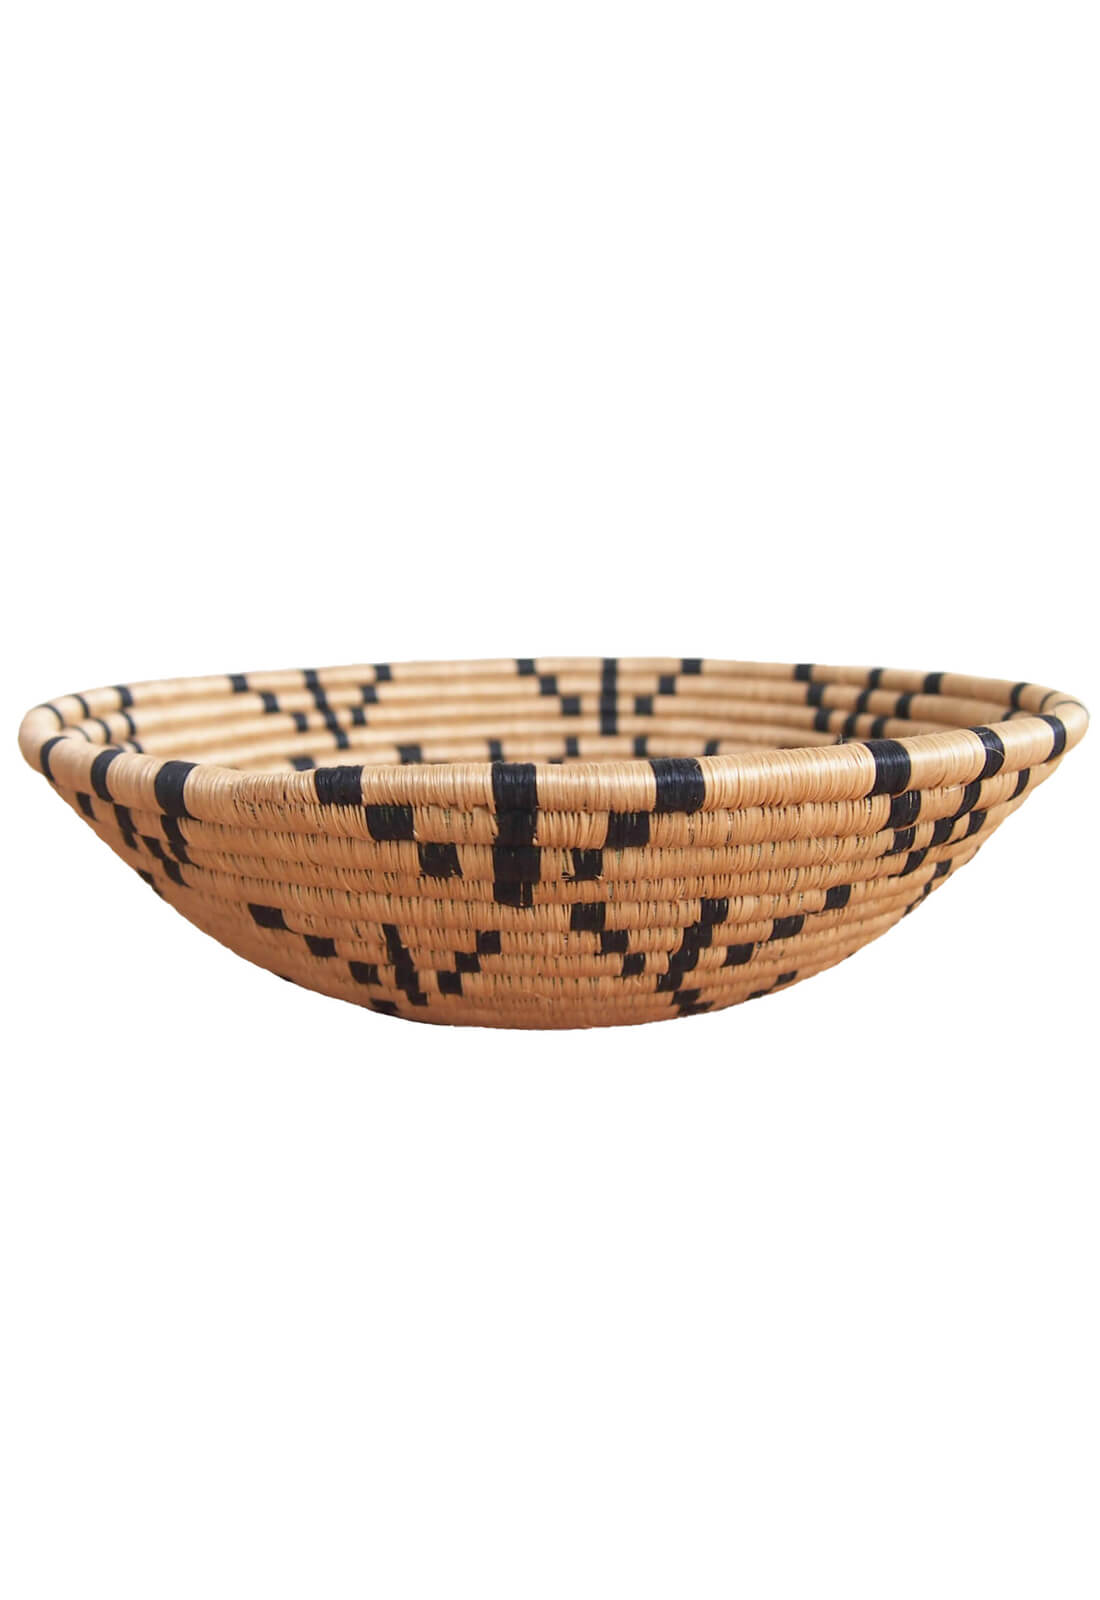 Hand Woven Mugusa Basket - Tan and Black, Small